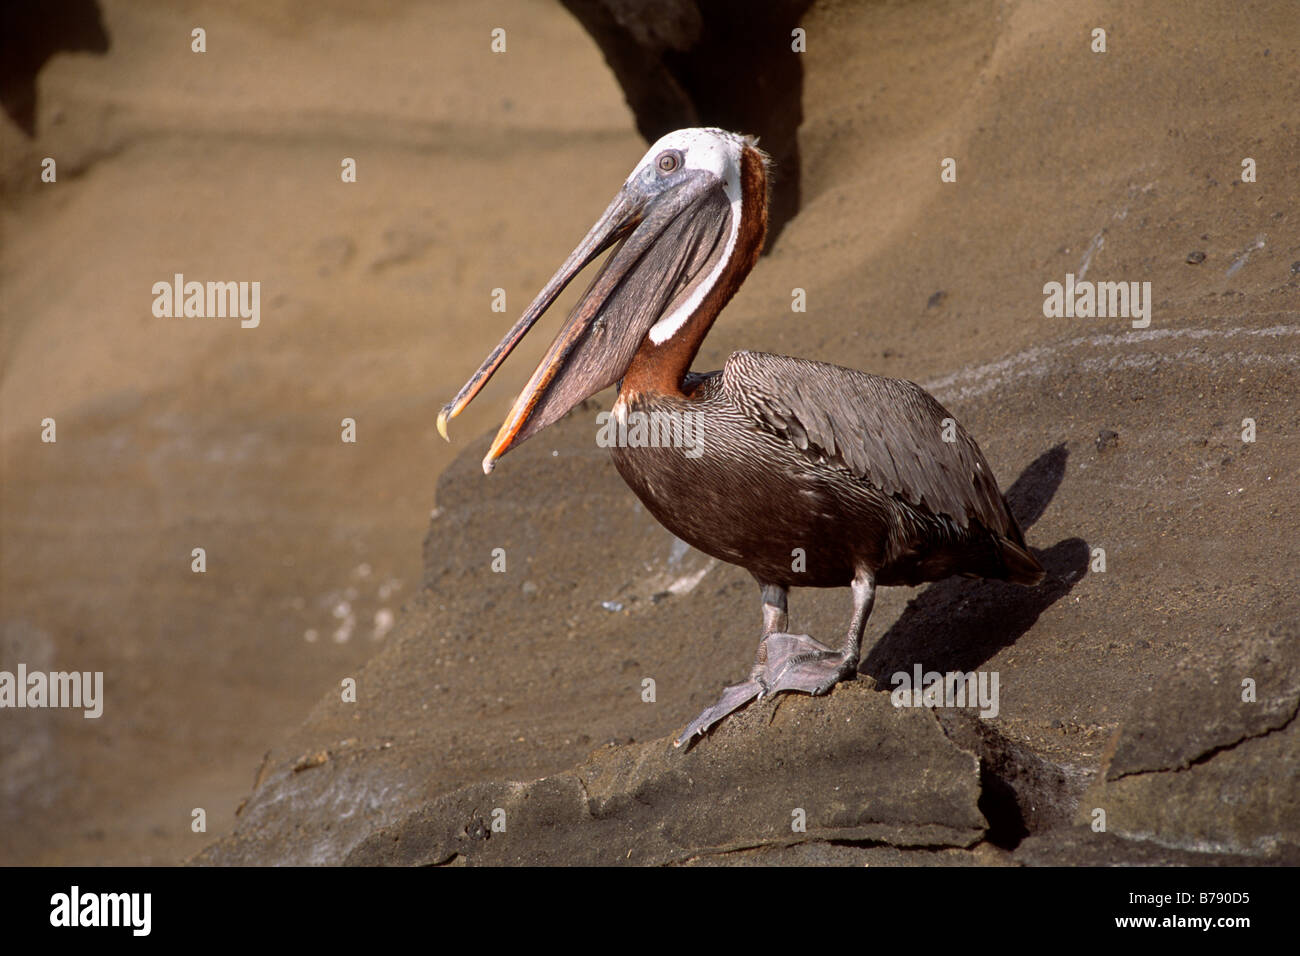 Brown Pelican (Pelecanus occidentalis) puffing, Insel Isabela, Galapagos Inseln, Galapagos Islands, Ecuador, South America Stock Photo